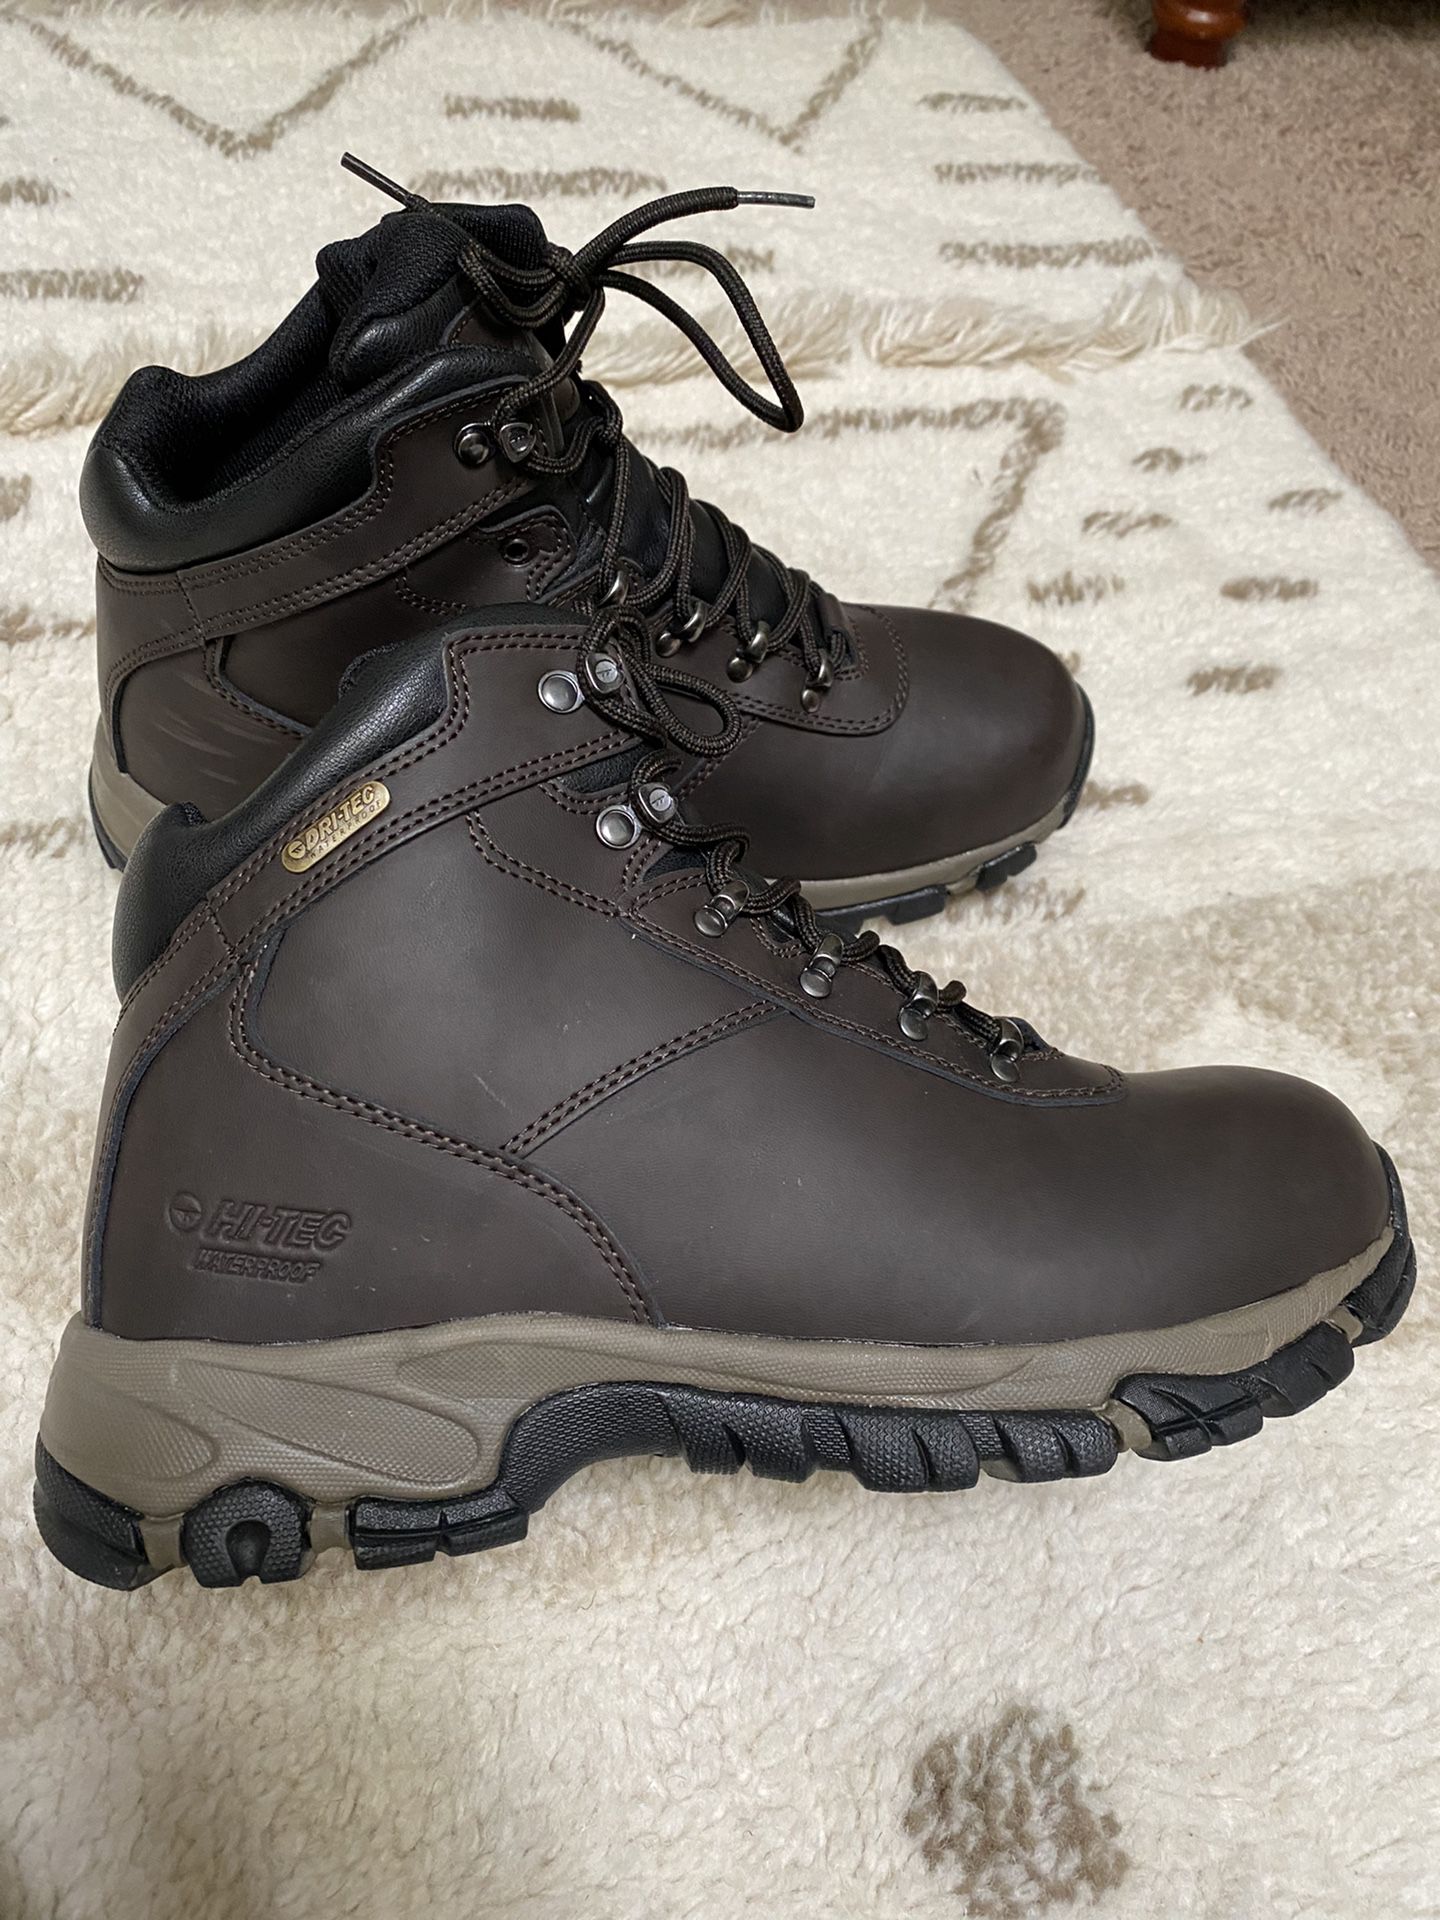 Hi-Tec Men's Altitude VI i Hiking Boots - Dark Chocolate - Size 9 New